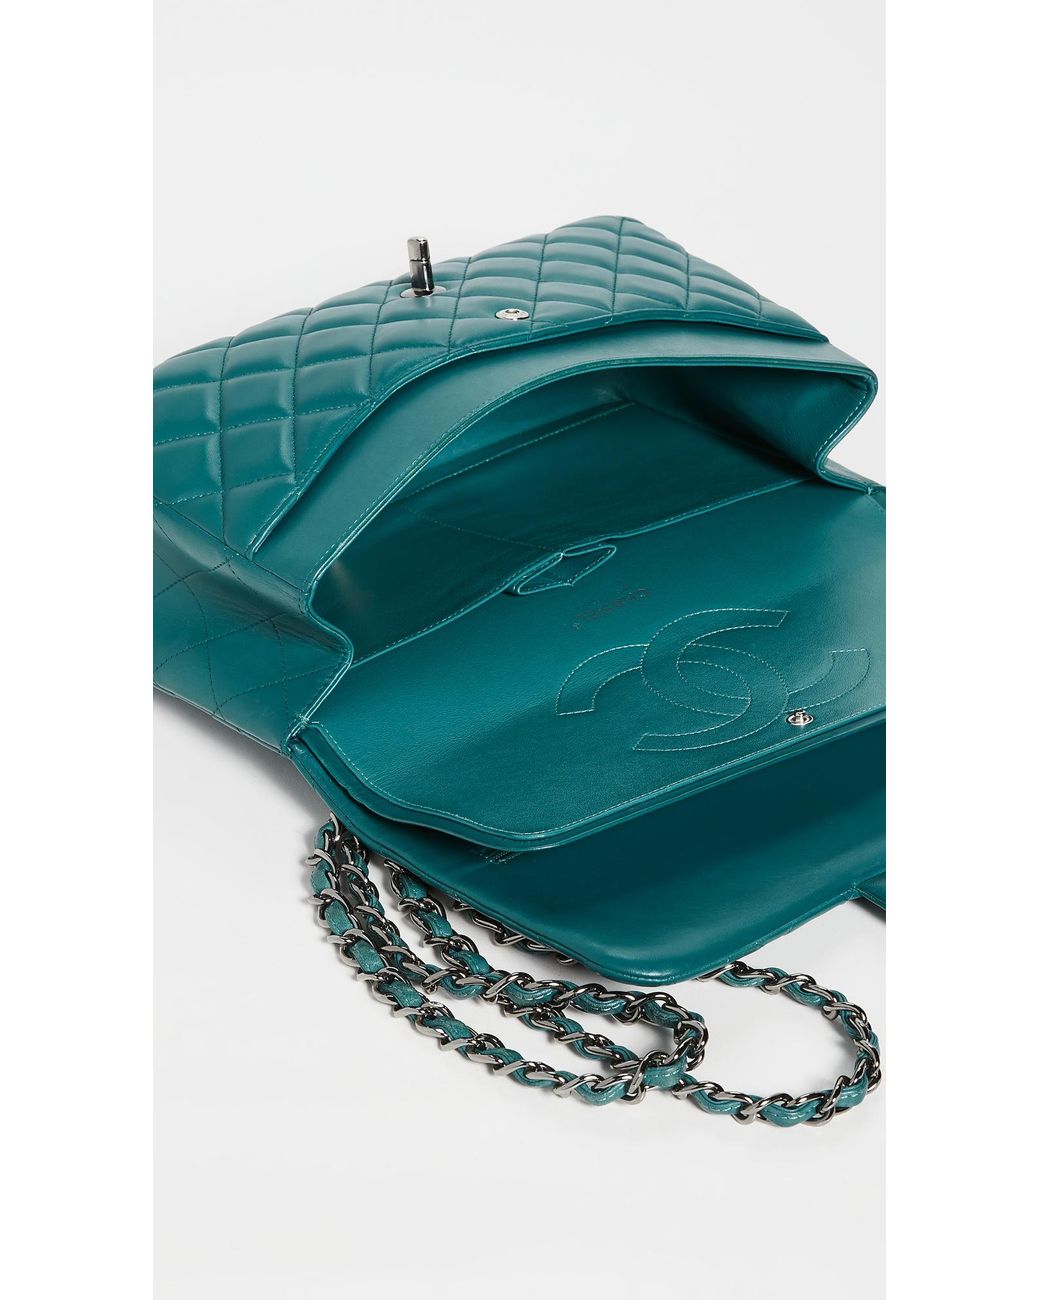 Chanel Classic Rectangular Mini Flap Bag in Dark Turquoise Caviar